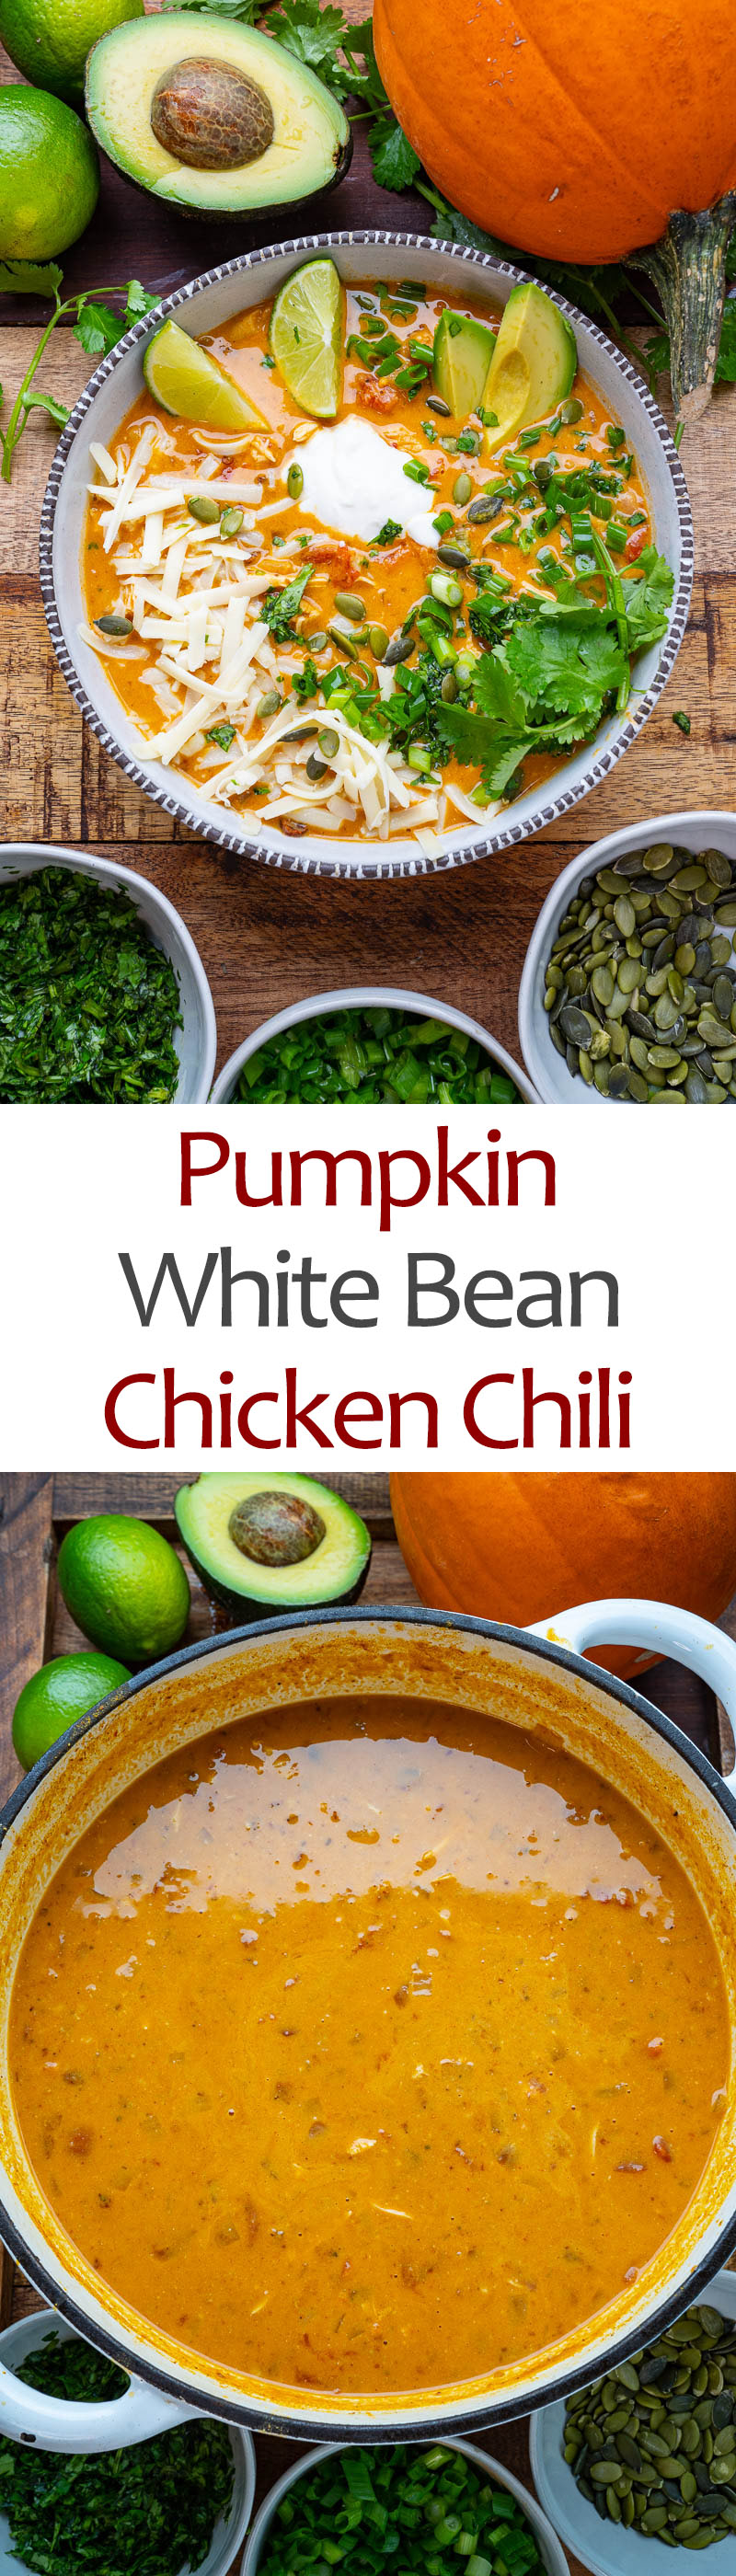 Pumpkin and White Bean Chicken Chili